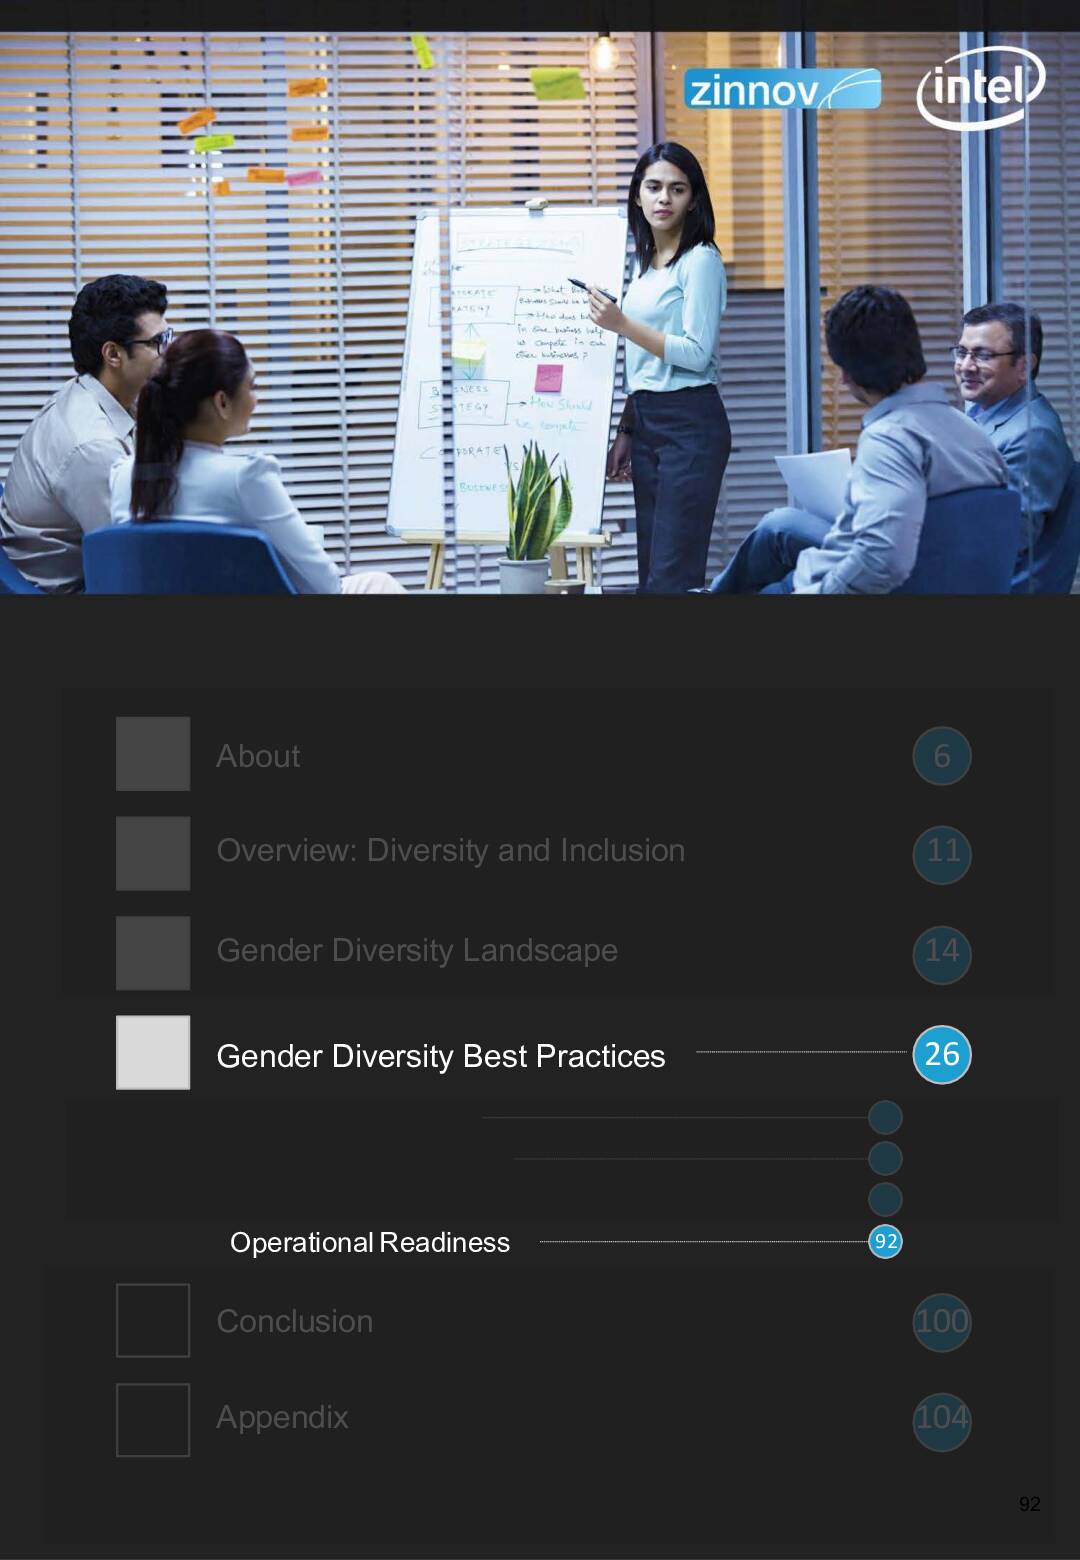 Zinnov Intel Gender Diversity Benchmark Study 201953